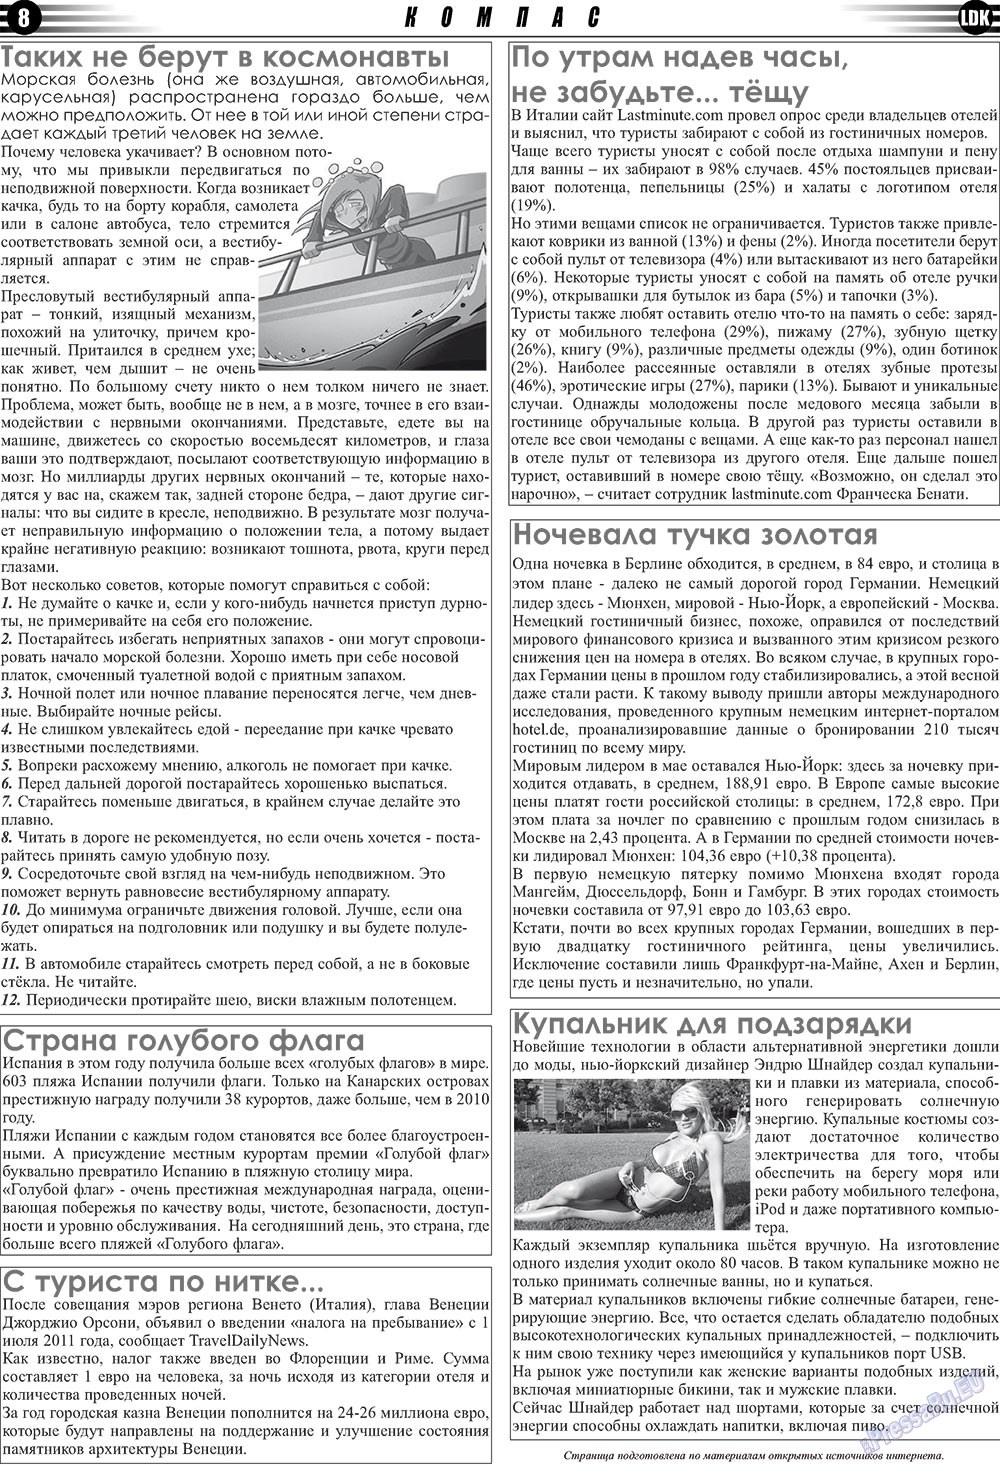 LDK по-русски, газета. 2011 №4 стр.8